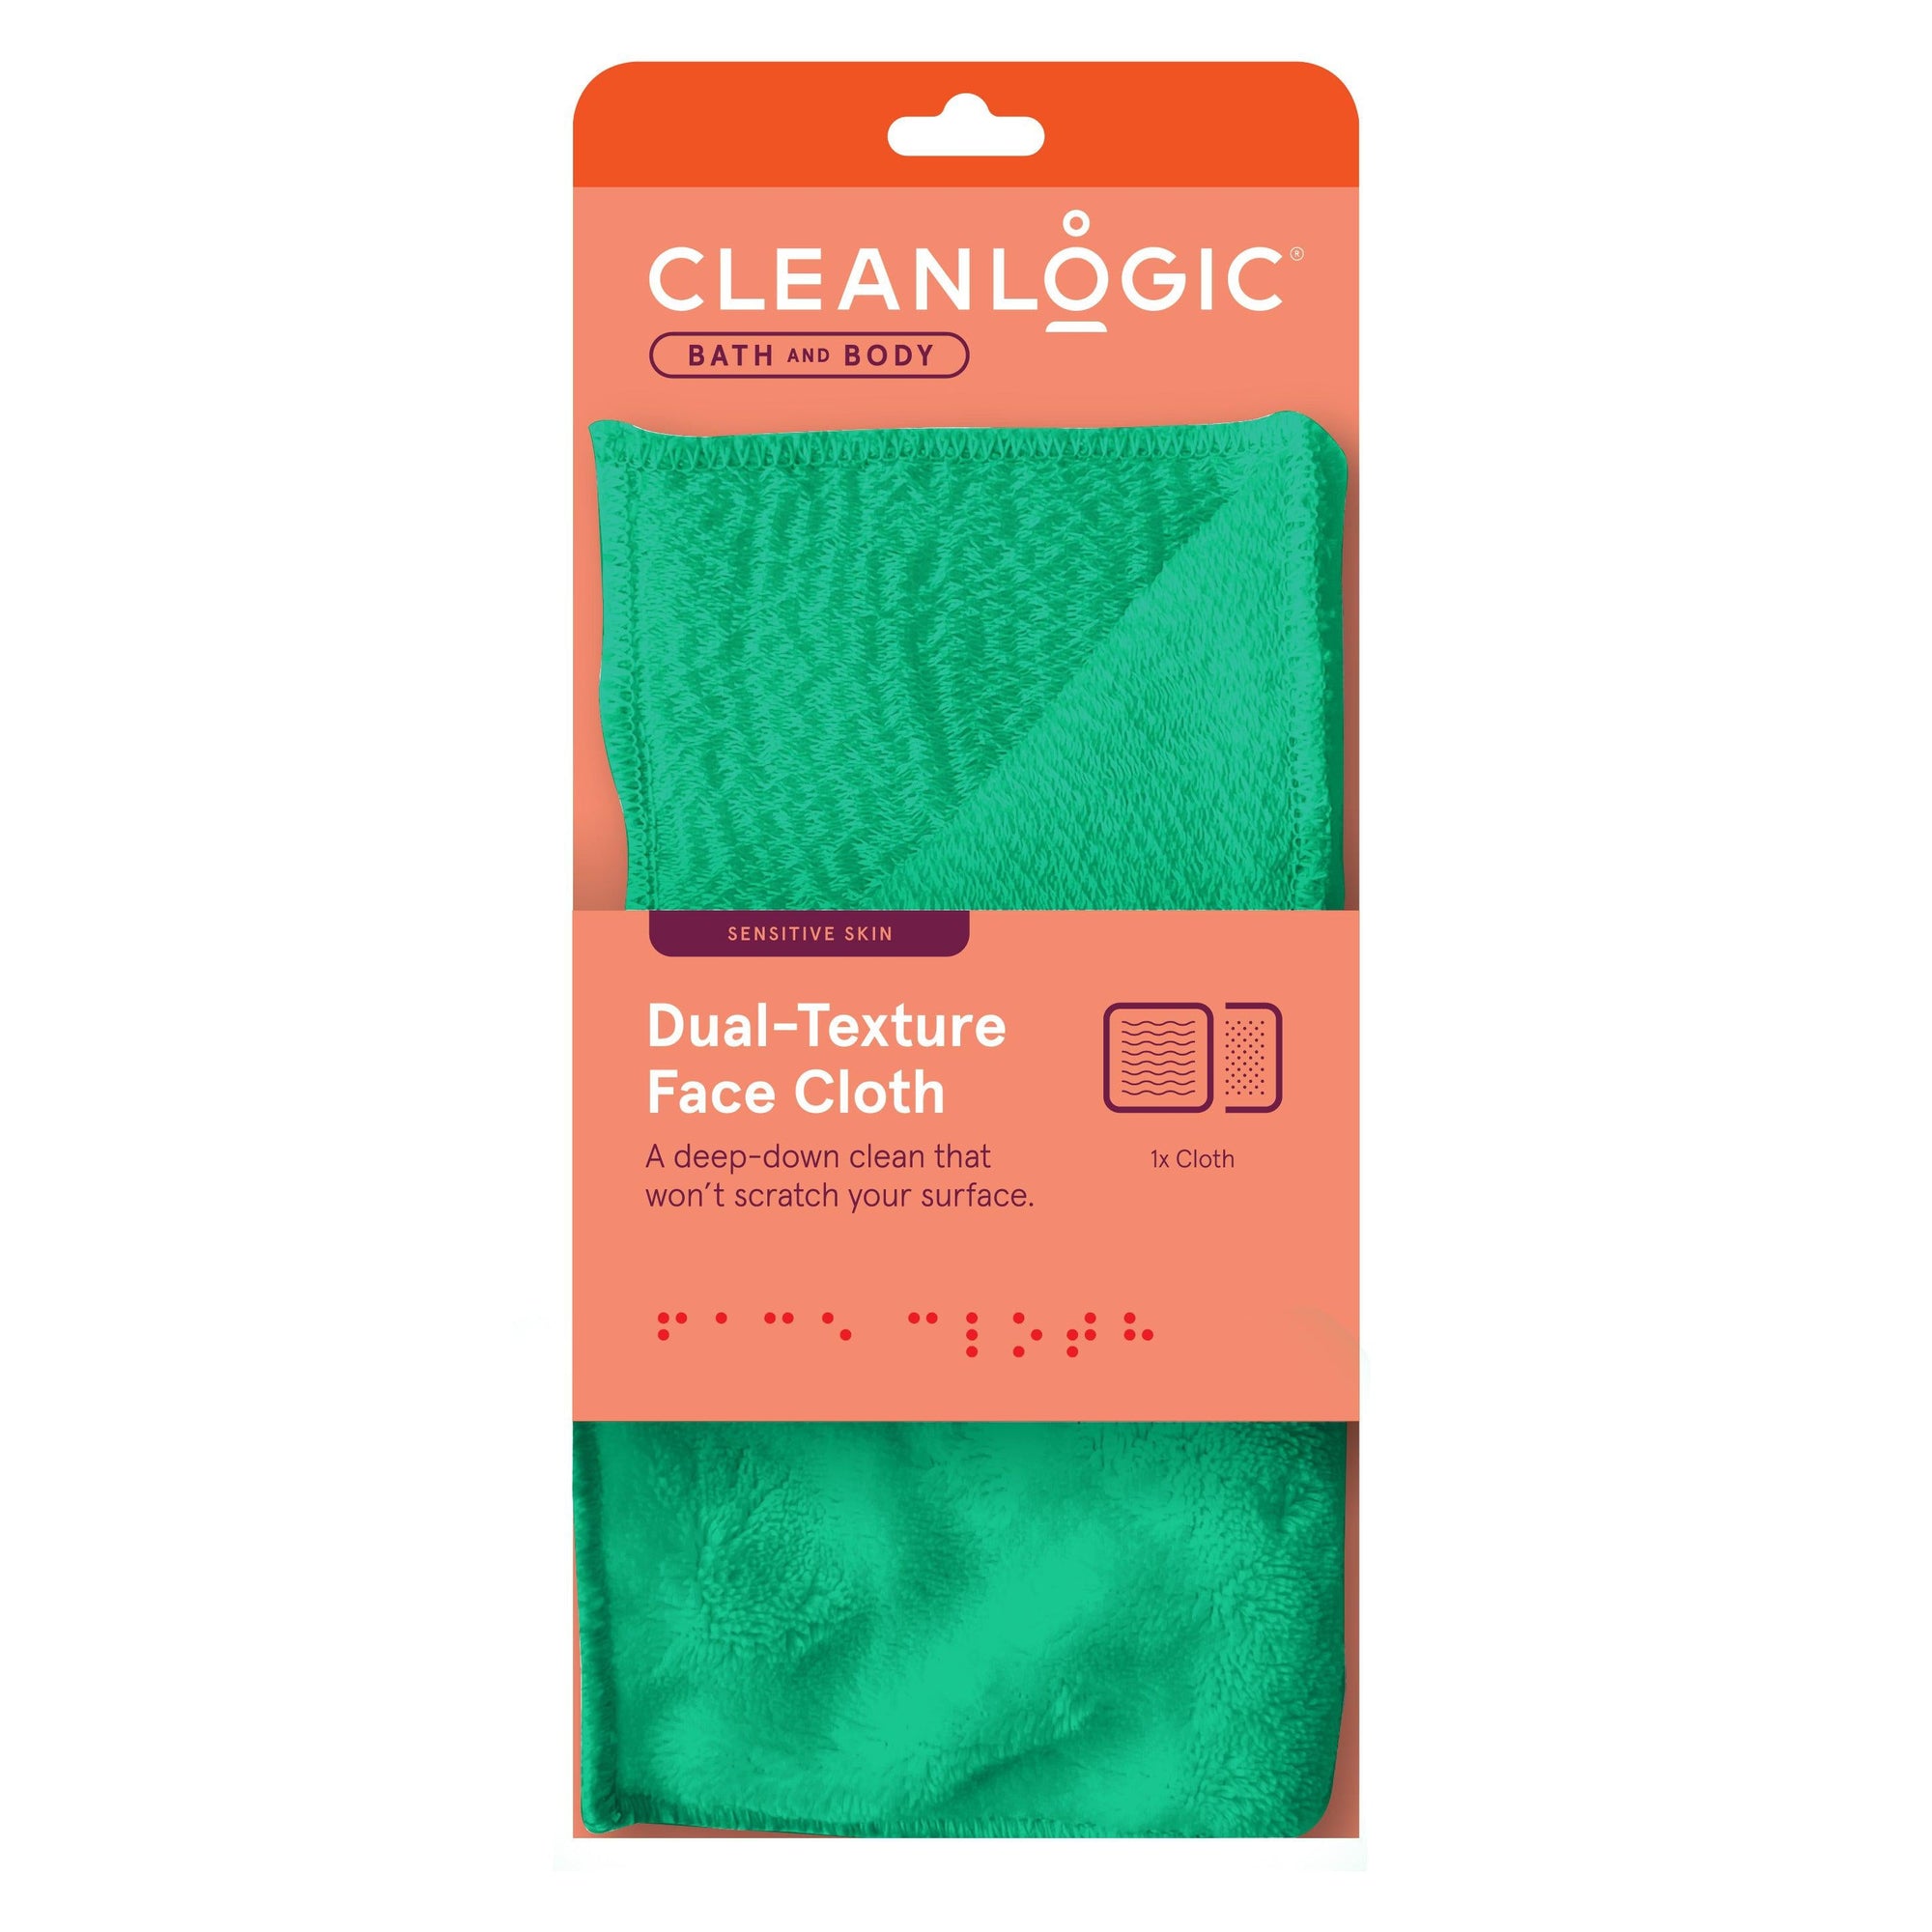 Cleanlogic Dual-Texture Facial Cloth